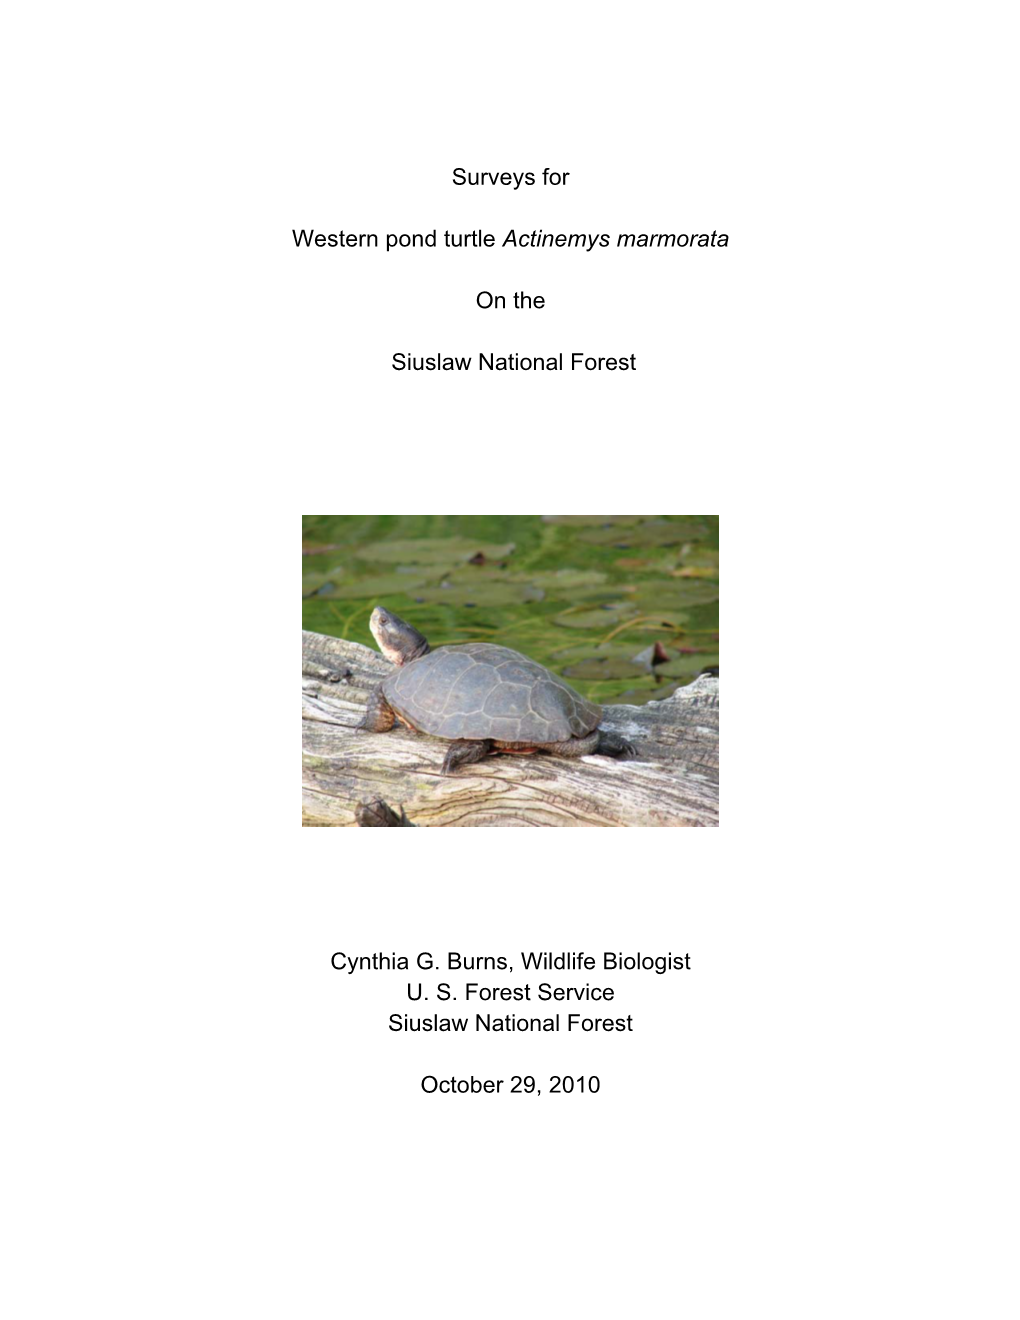 Surveys for Western Pond Turtle Actinemys Marmorata on The